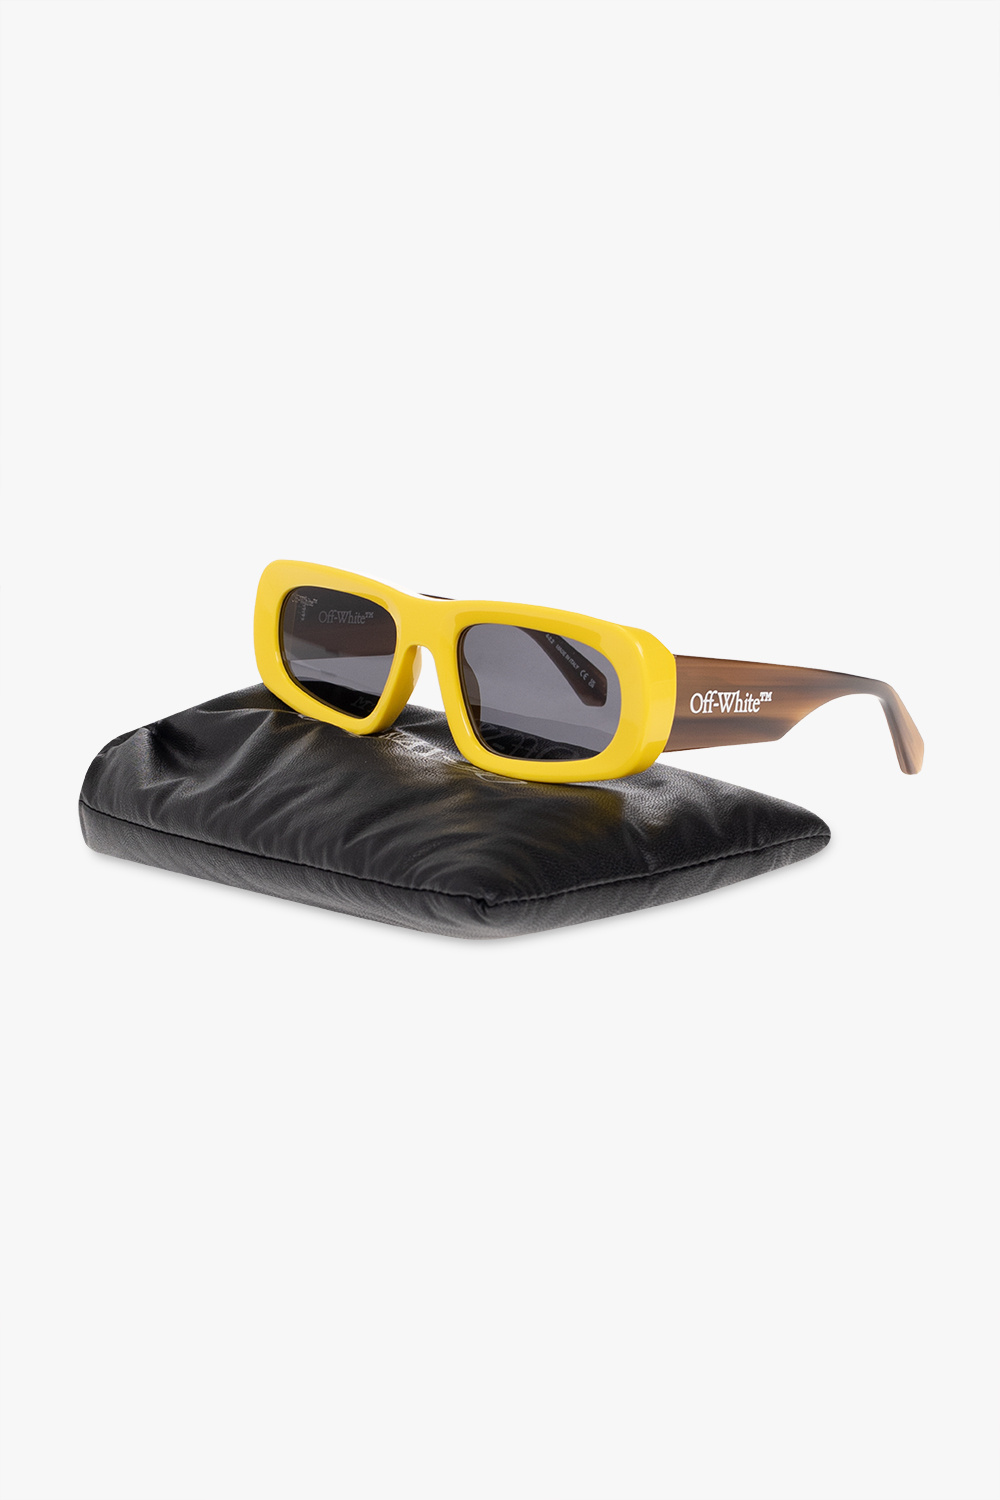 Off-White Black/Yellow Sunglasses